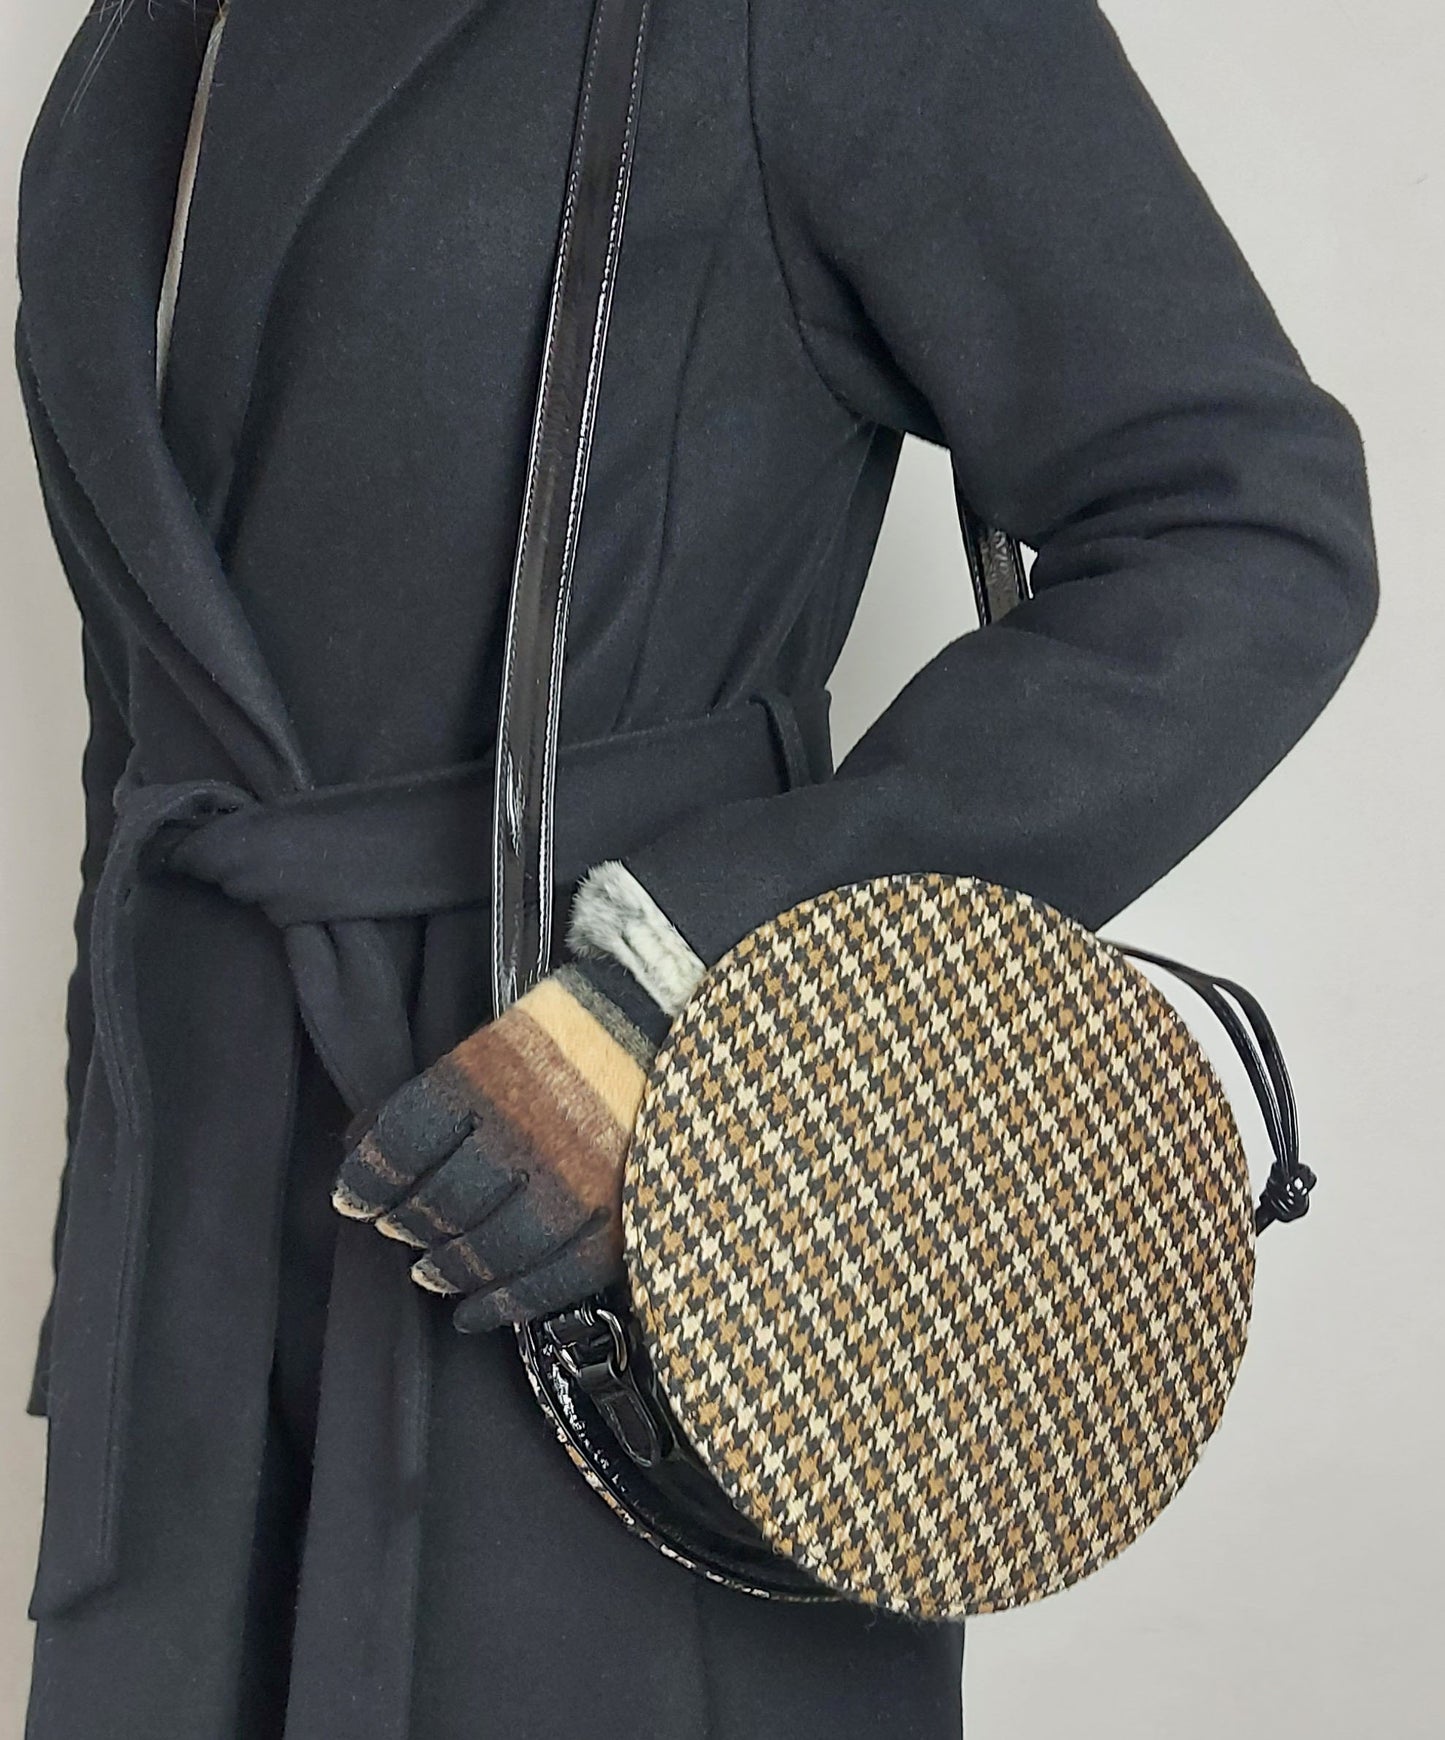 Retro styled Brown Tweed patterned Round Crossbody bag